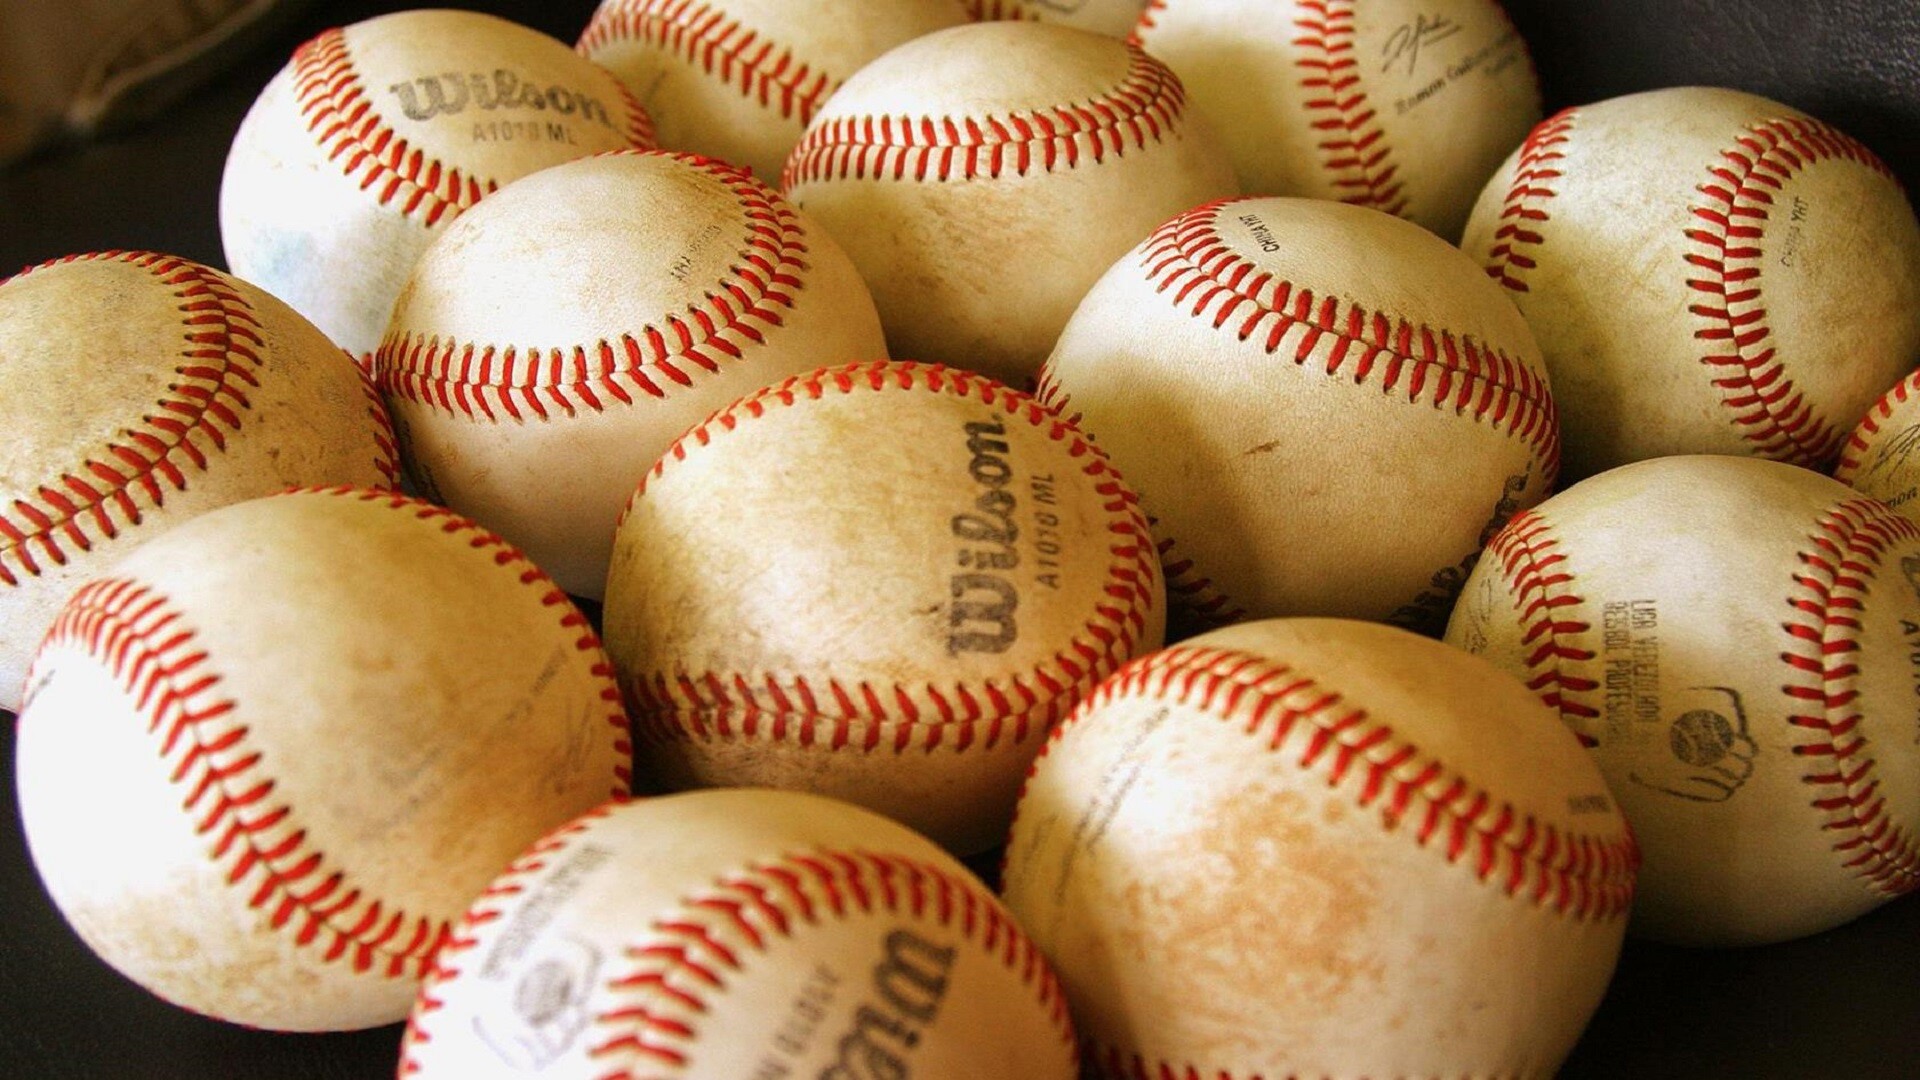 HD baseball wallpaper, Baseball imagery, Baseball equipment close-up, Baseball passion, 1920x1080 Full HD Desktop